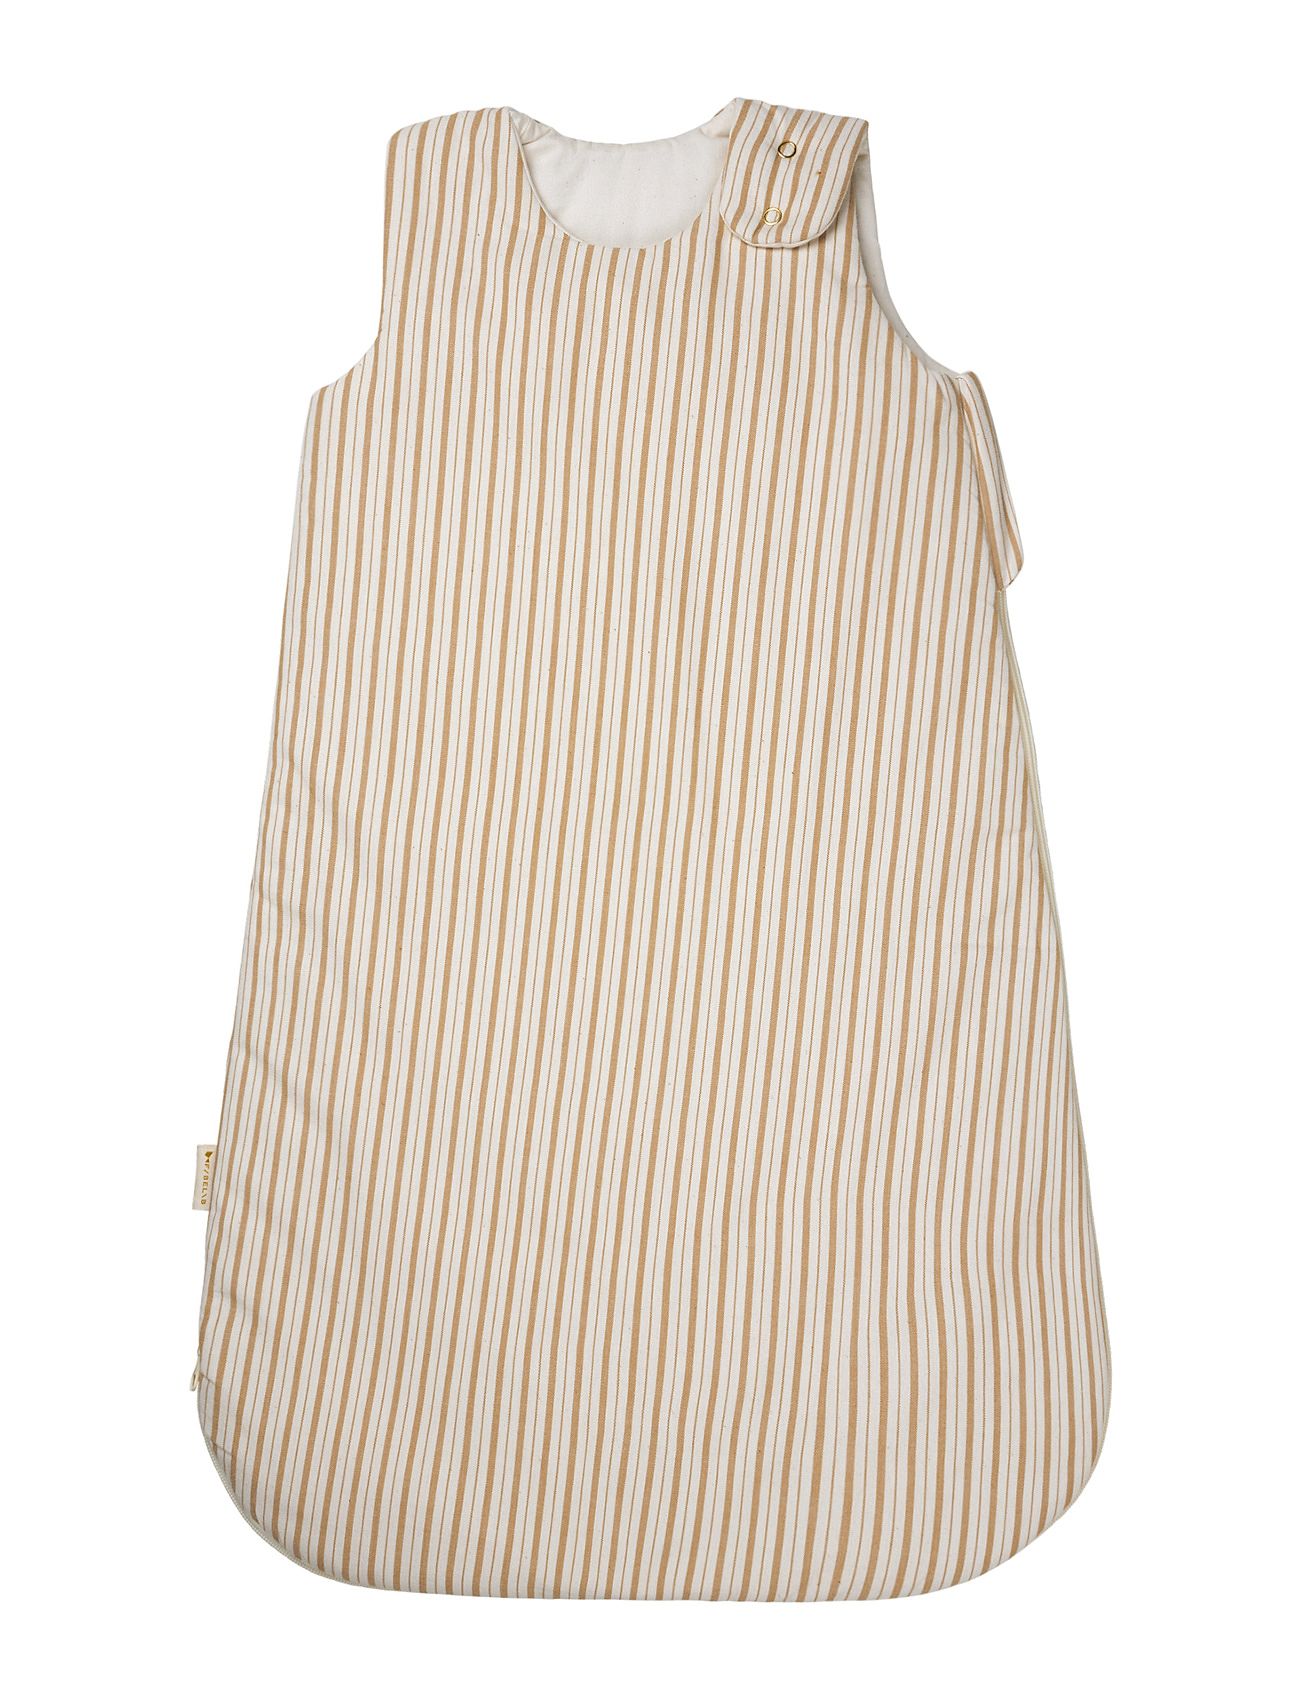 Sleeping Bag - Caramel Stripes 0-6M Home Sleep Time Sleeping Bags Beige Fabelab